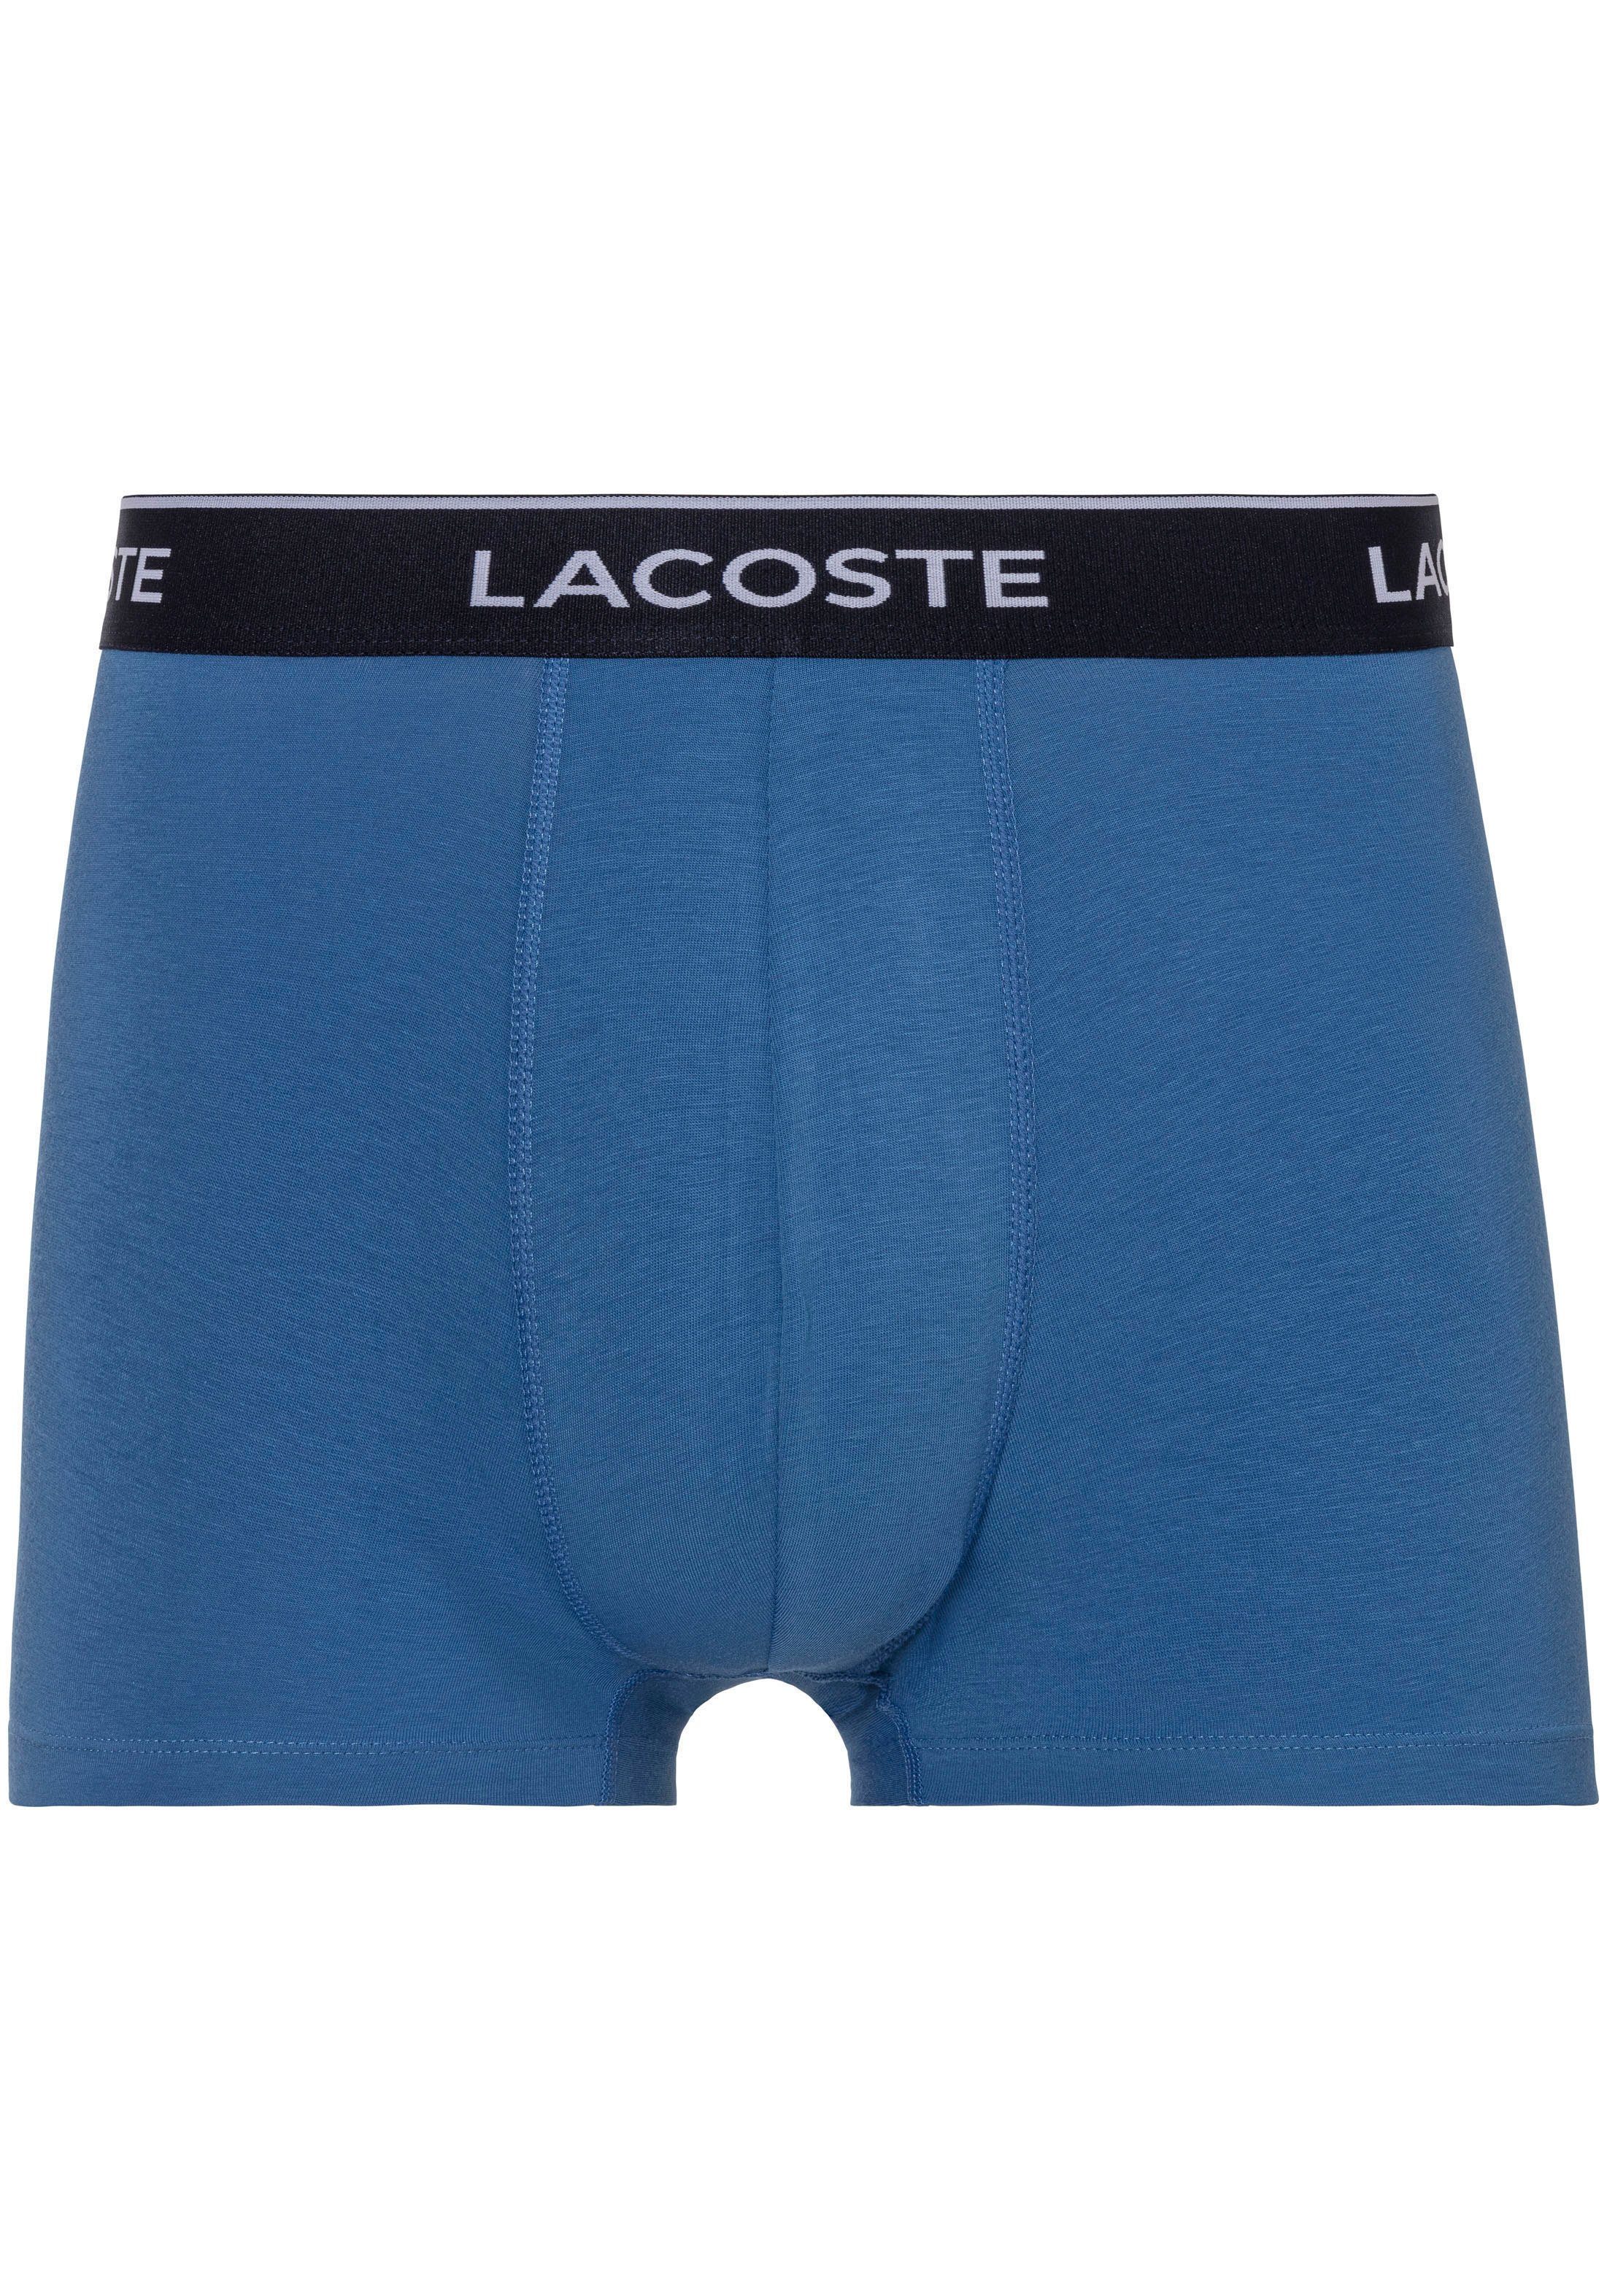 3er-Pack) Trunk Boxershorts (Packung, Premium 3-St., eng grau-blau-hb atmungsaktivem Lacoste Herren aus Material Lacoste